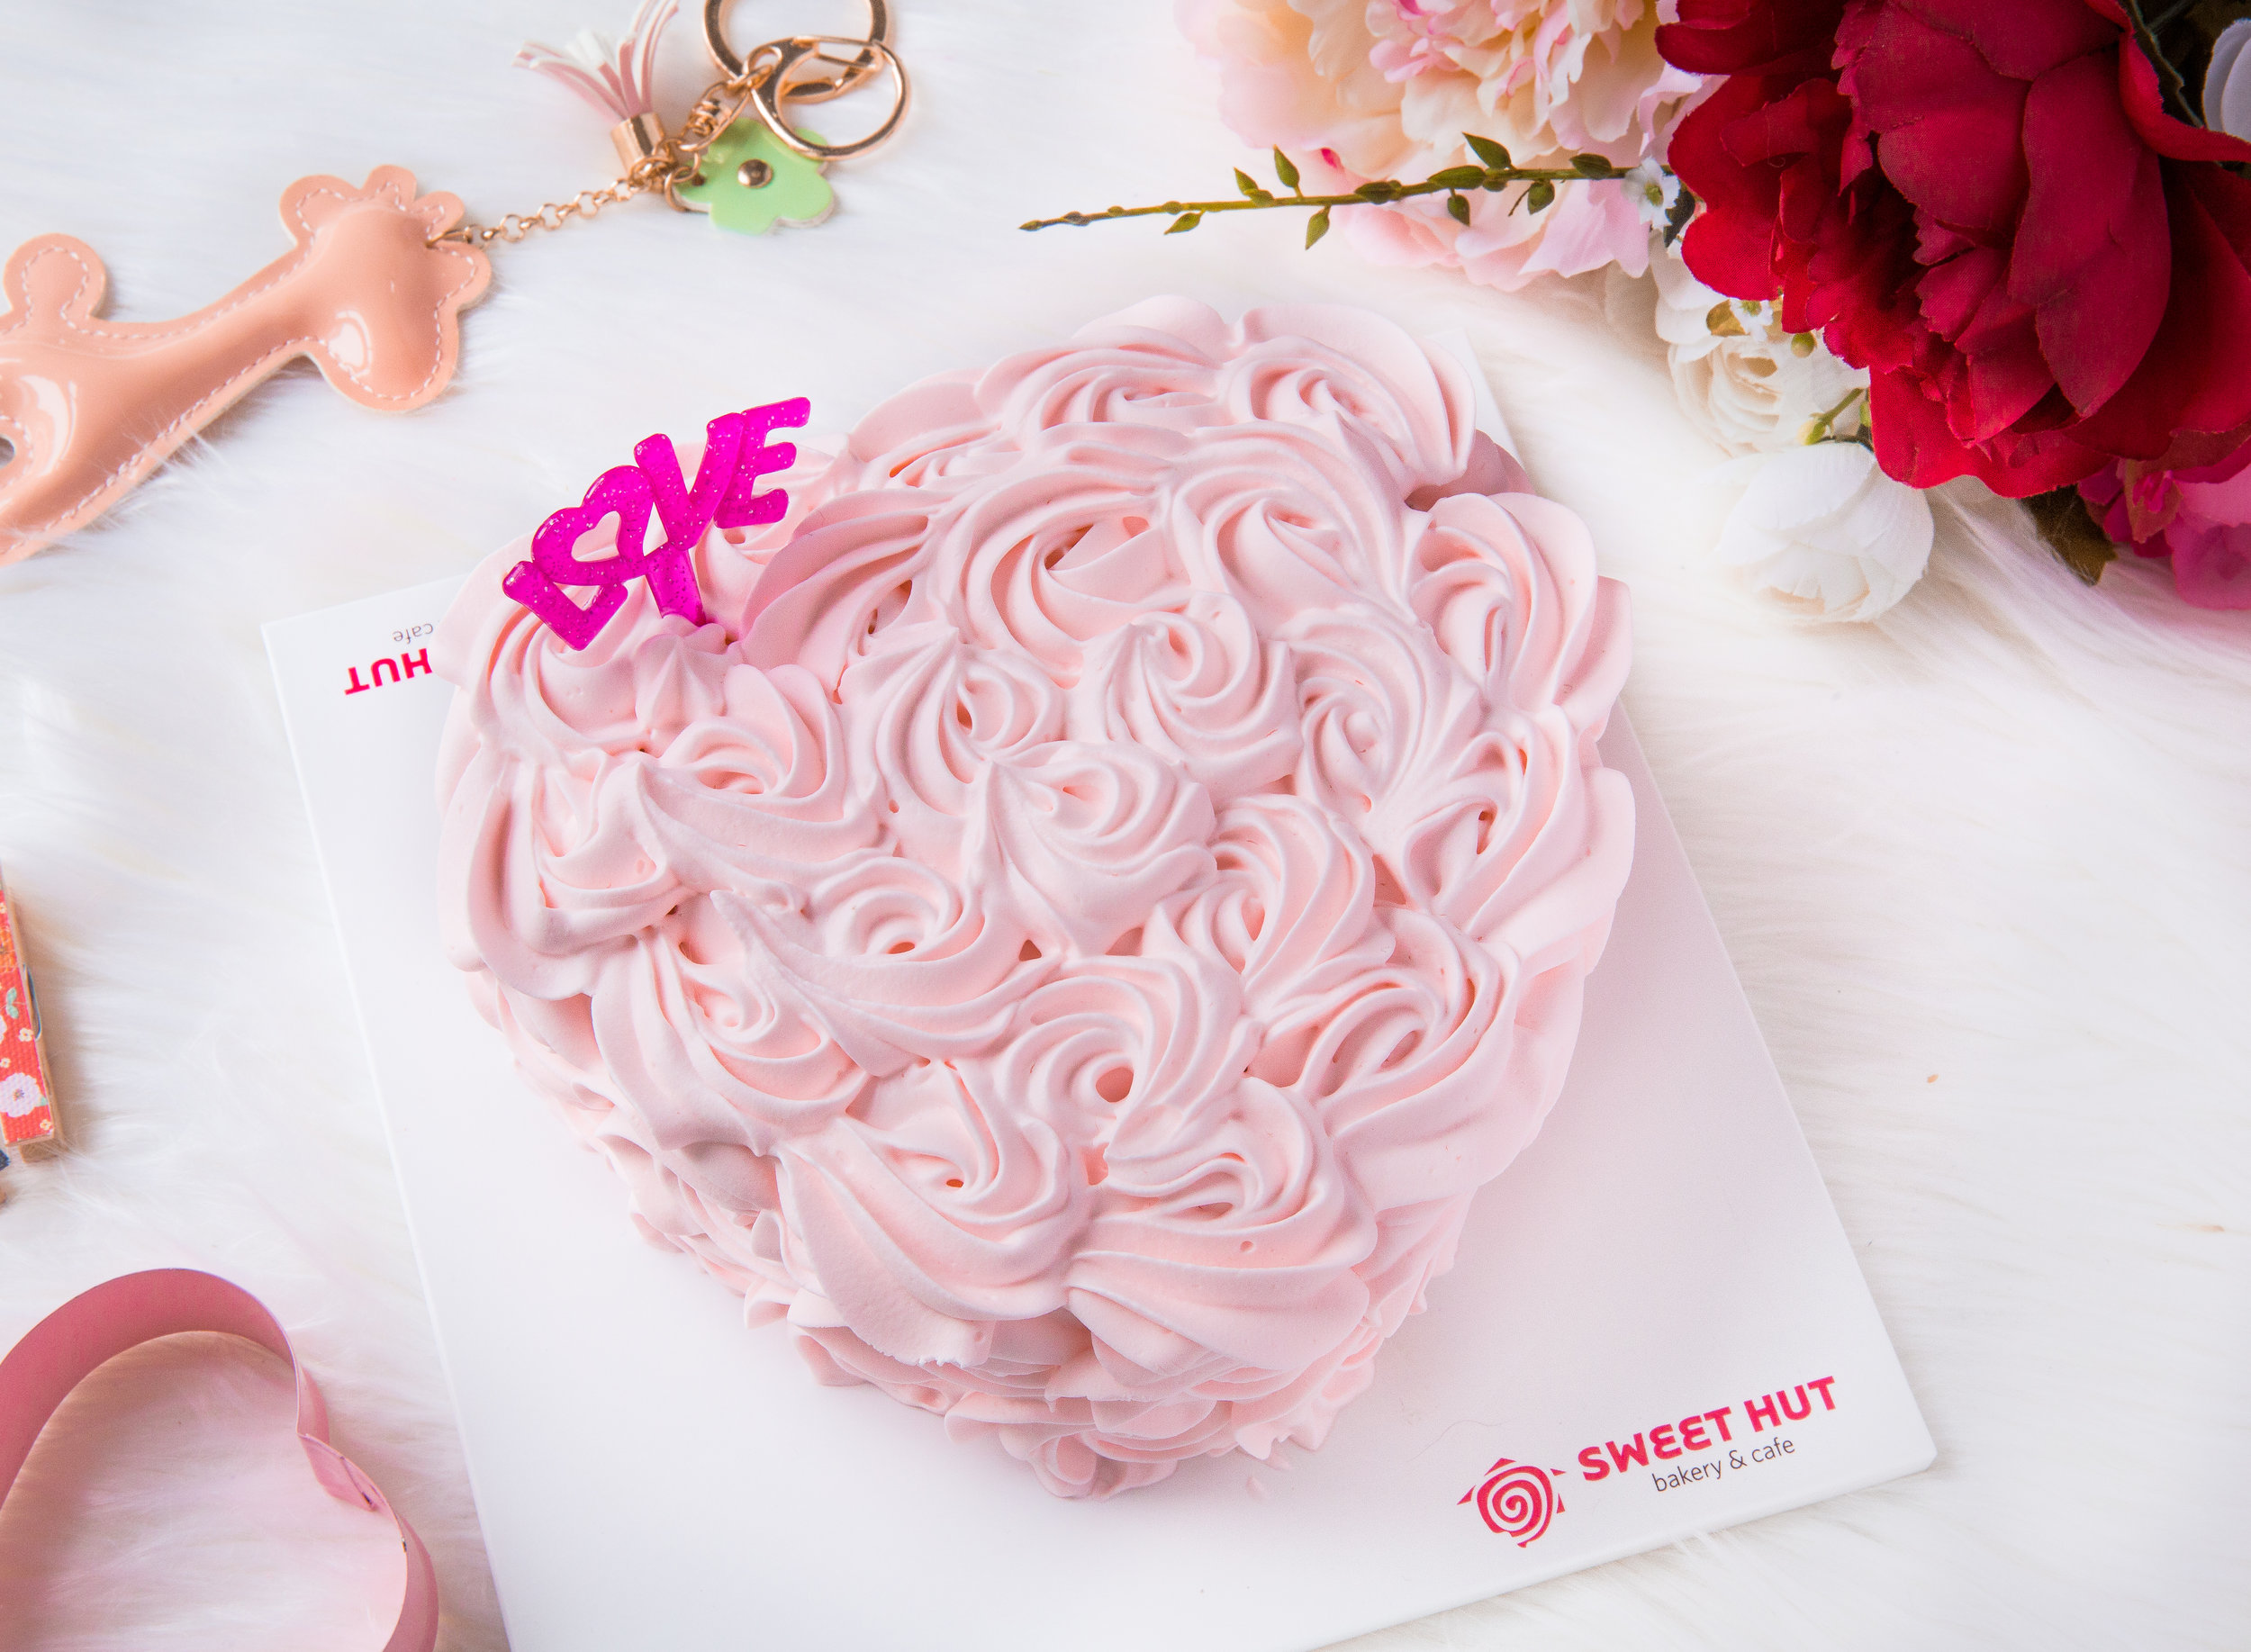 SH Valentine's Day Cakes-3.jpg